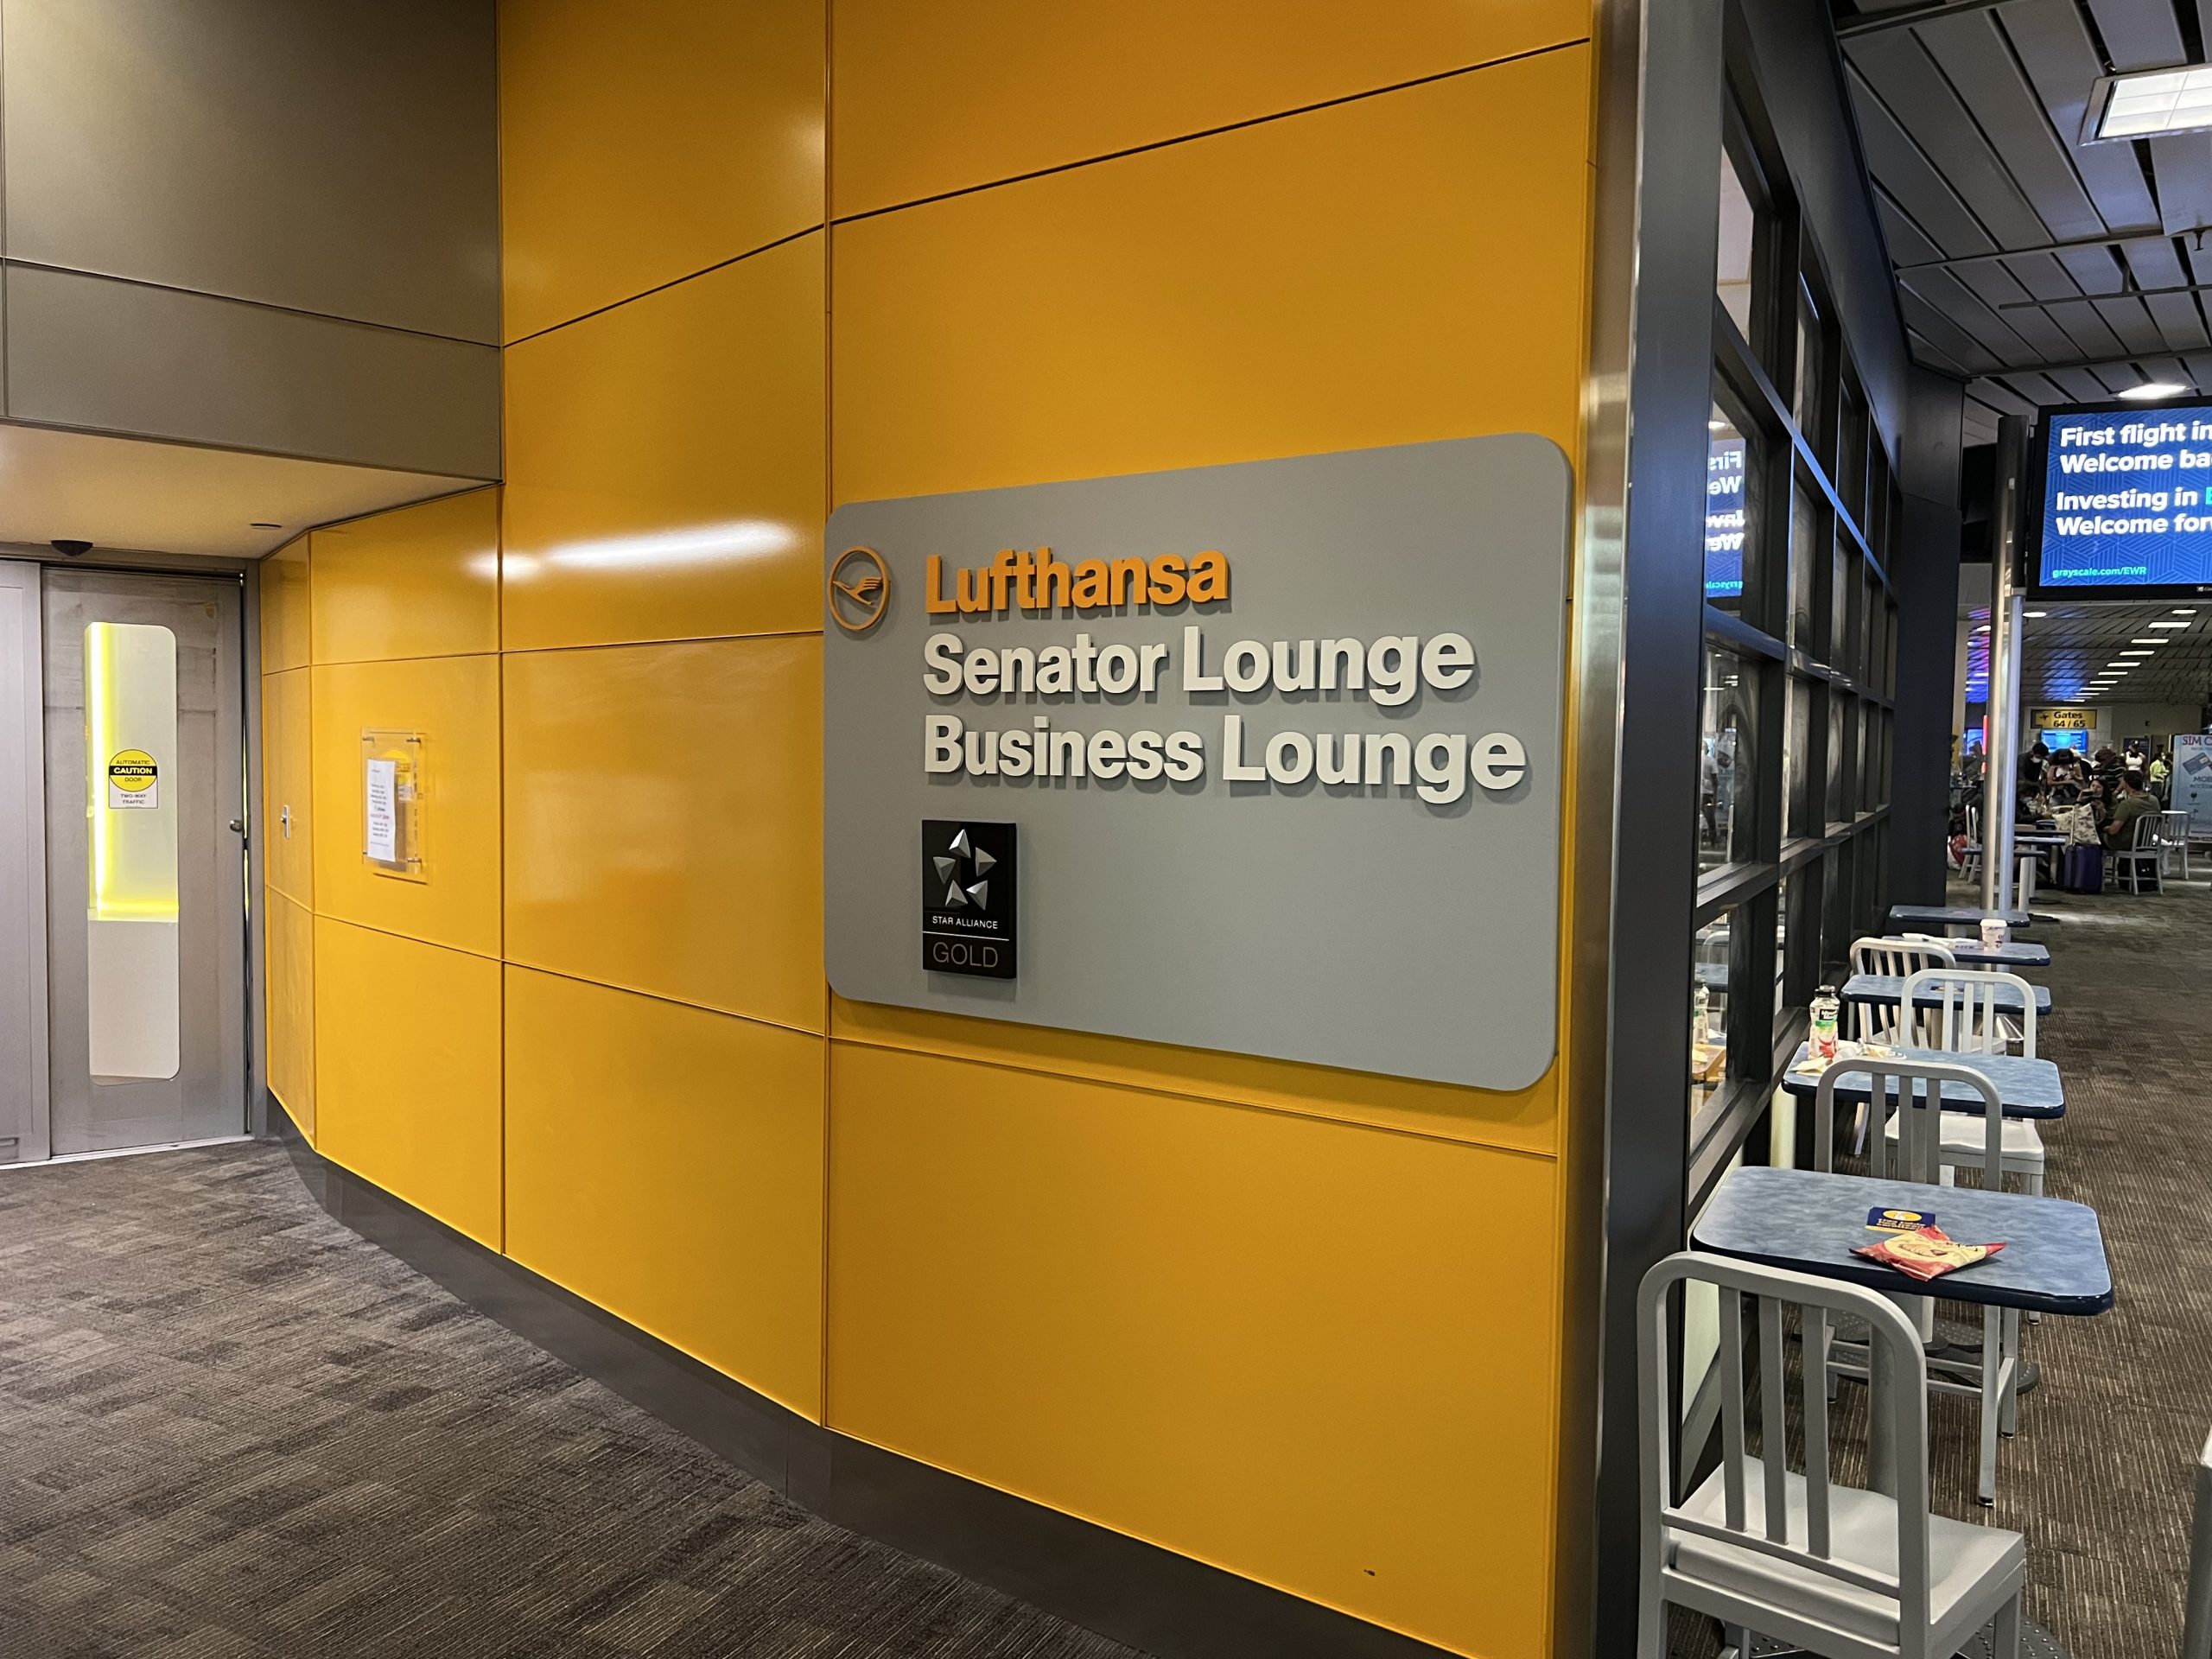 Lufthansa Lounge Newark Airport